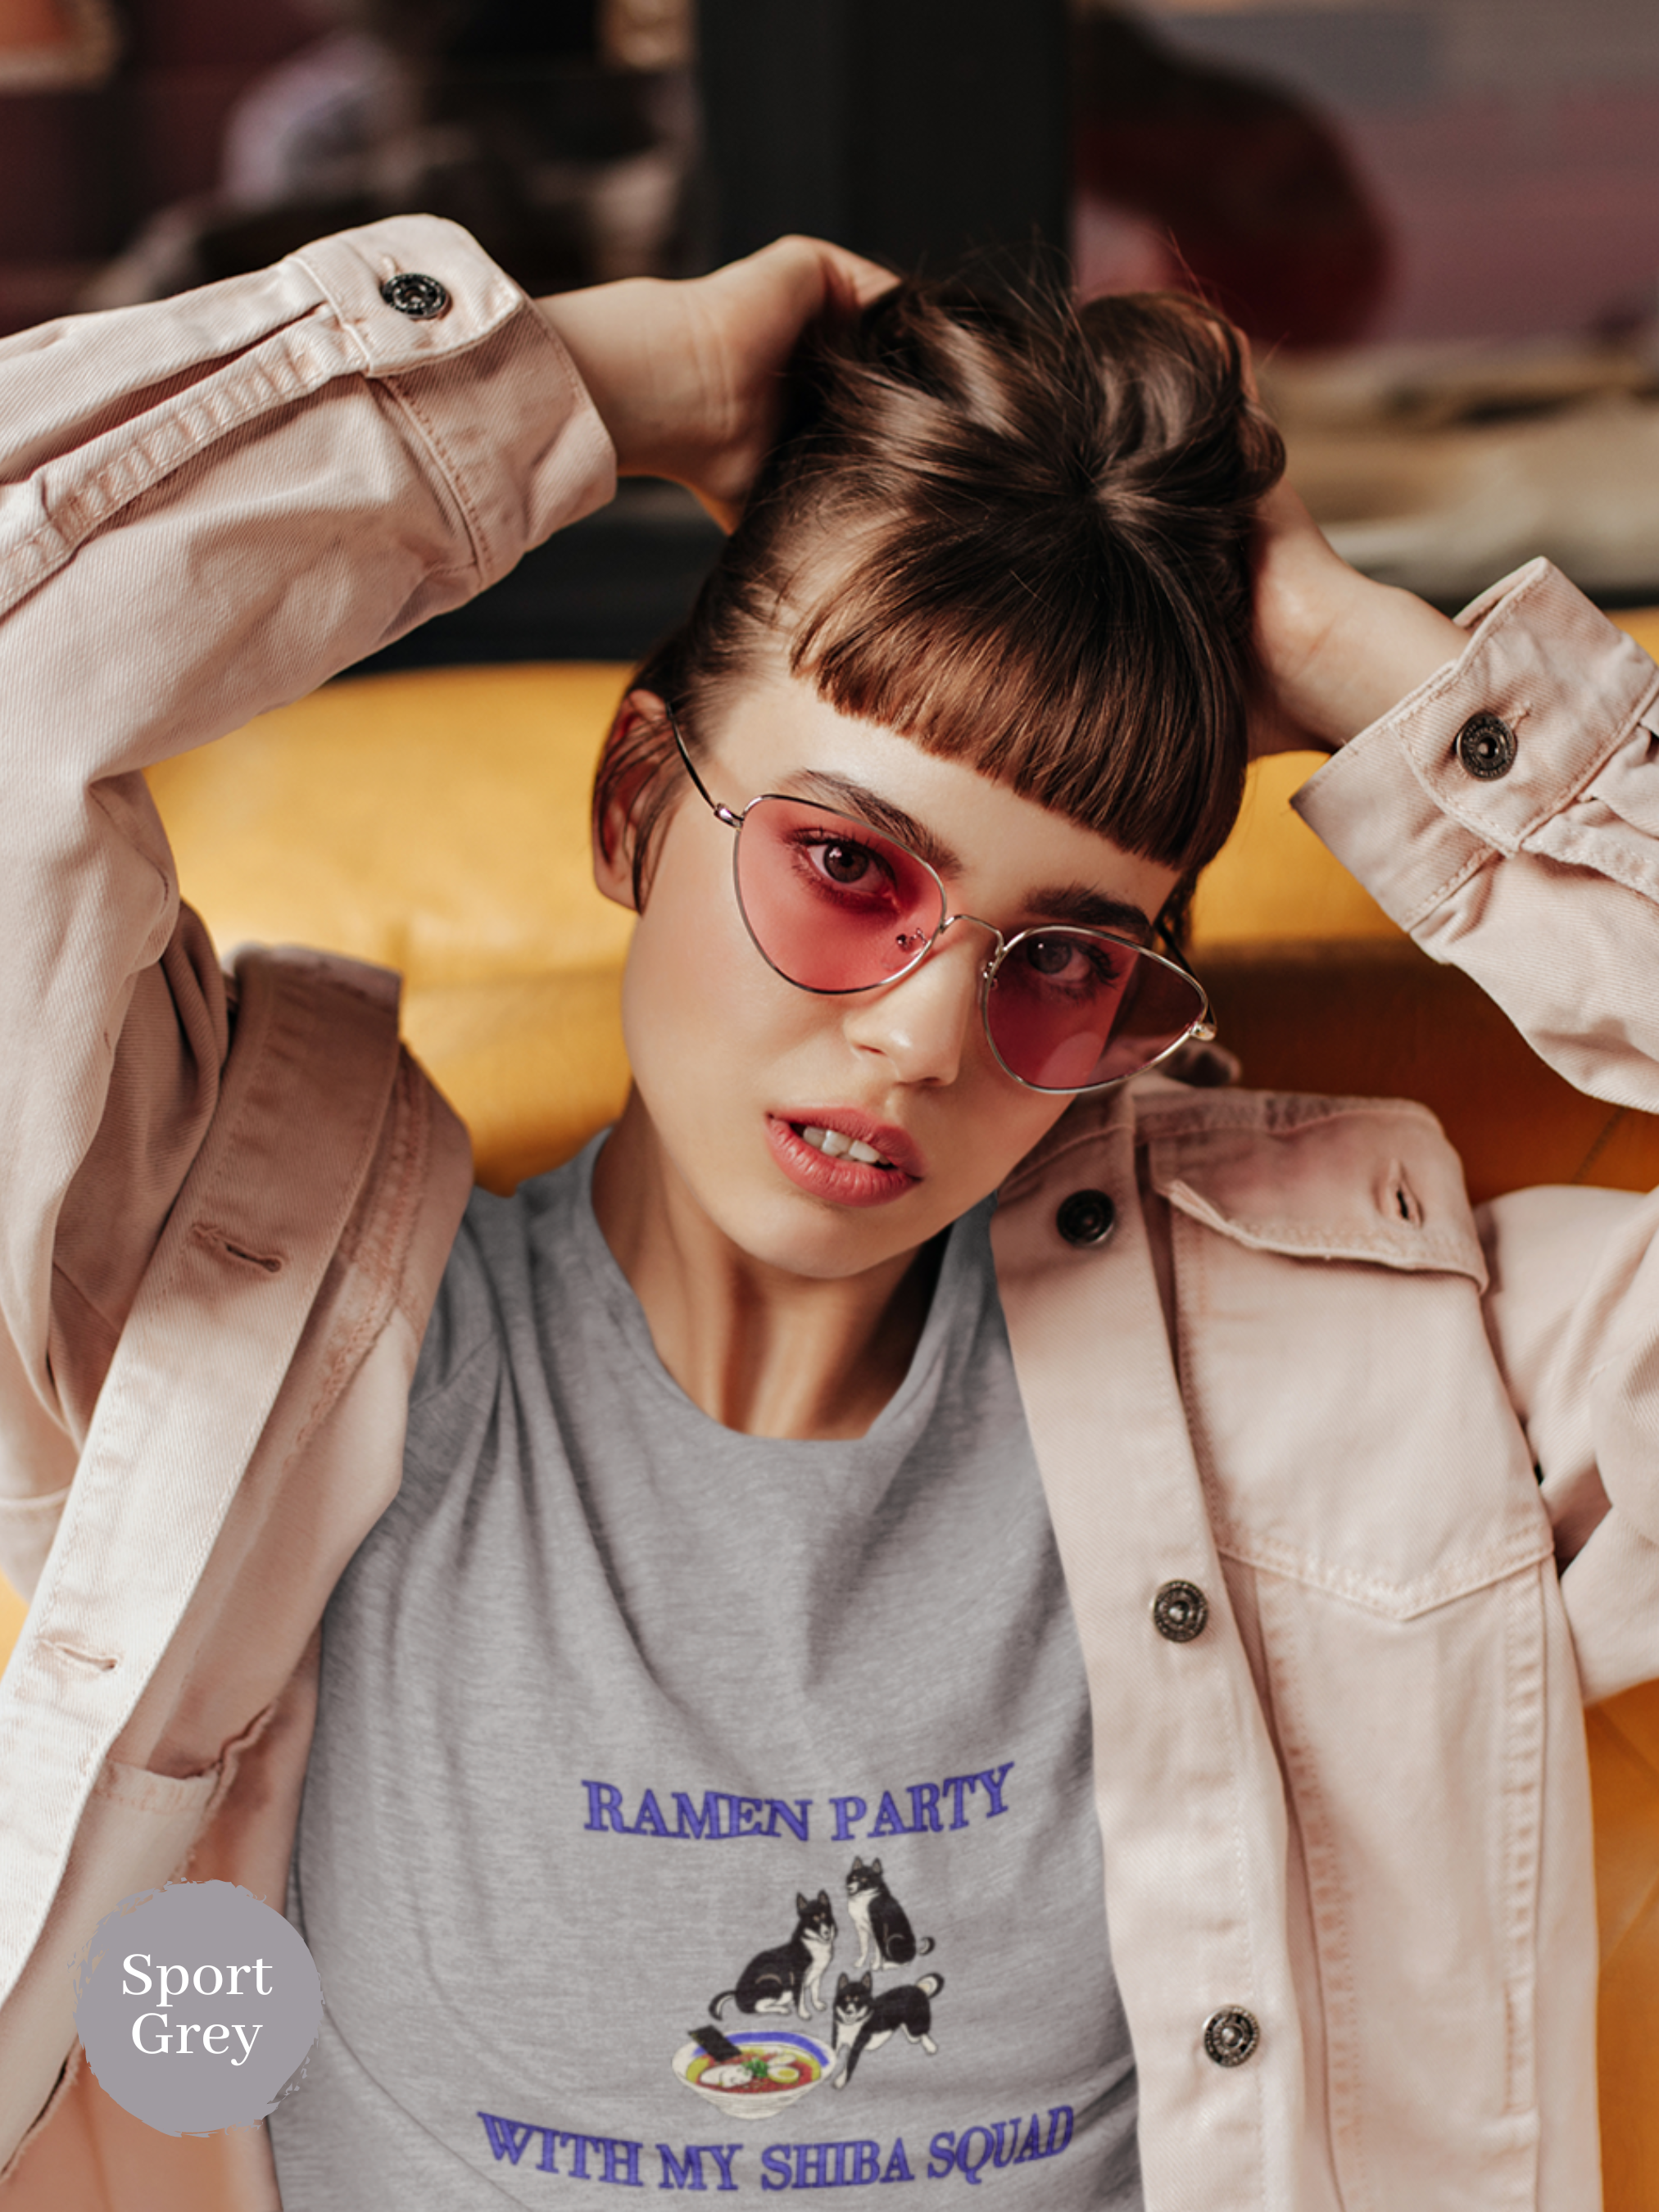 Ramen T-shirt: Ramen Party with My Shiba Squad - Japanese Foodie Shirt with Ramen Art